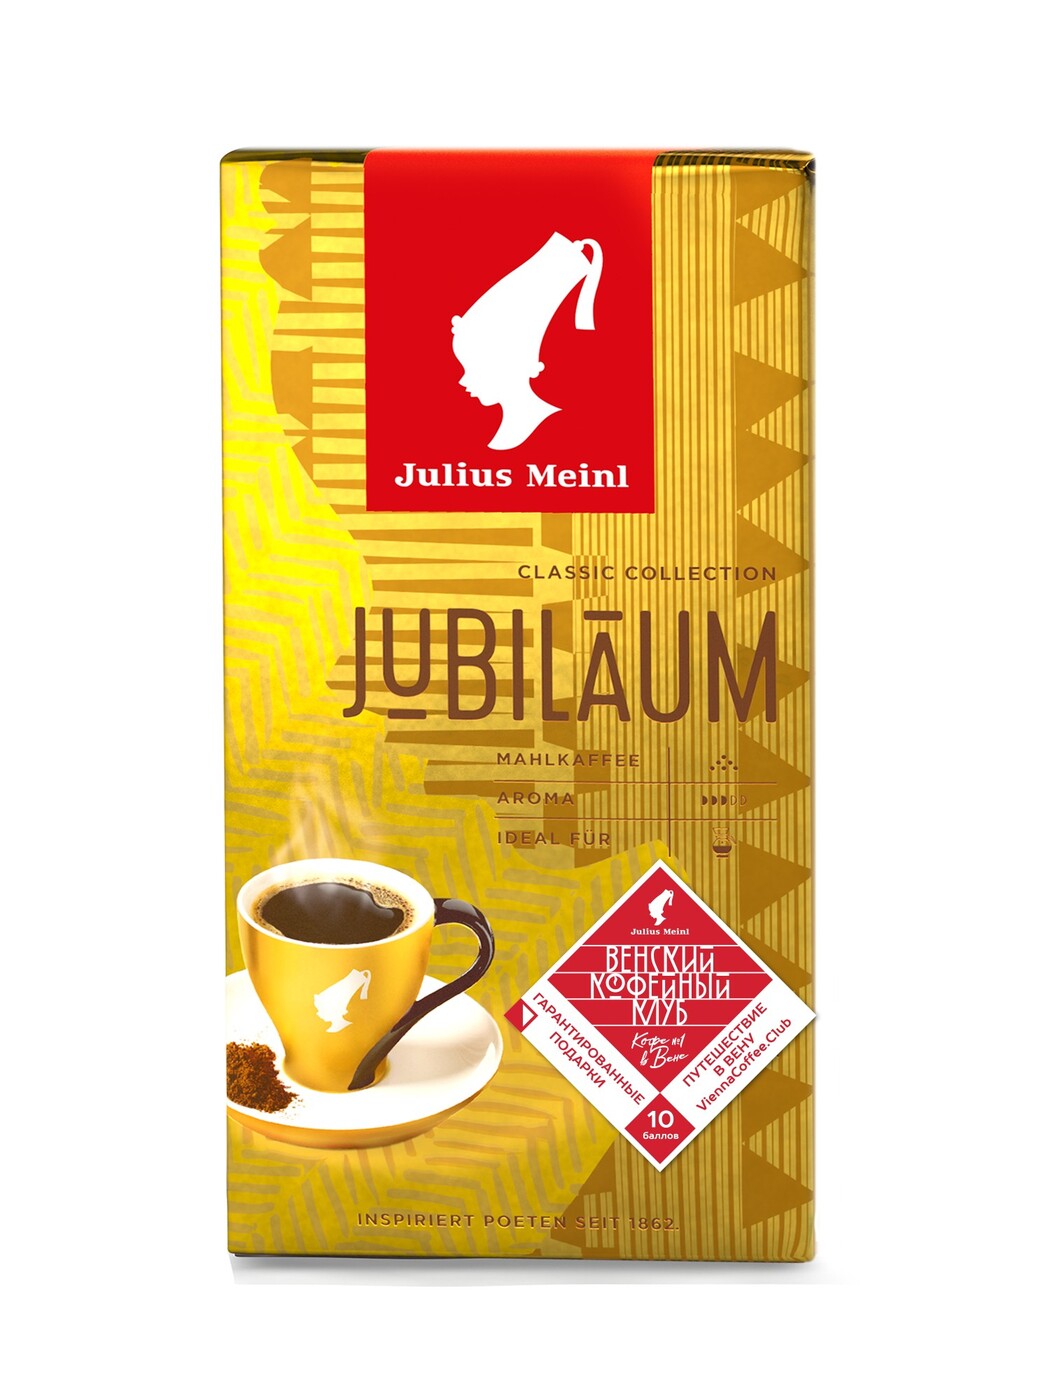 Julius кофе молотый. Джулиус Майнл кофе молотый. Кофе молотый Julius Meinl Jubilaum. Кофе молотый Джулиус Мейн. Кофе молотый Julius Meinl Юбилейный.